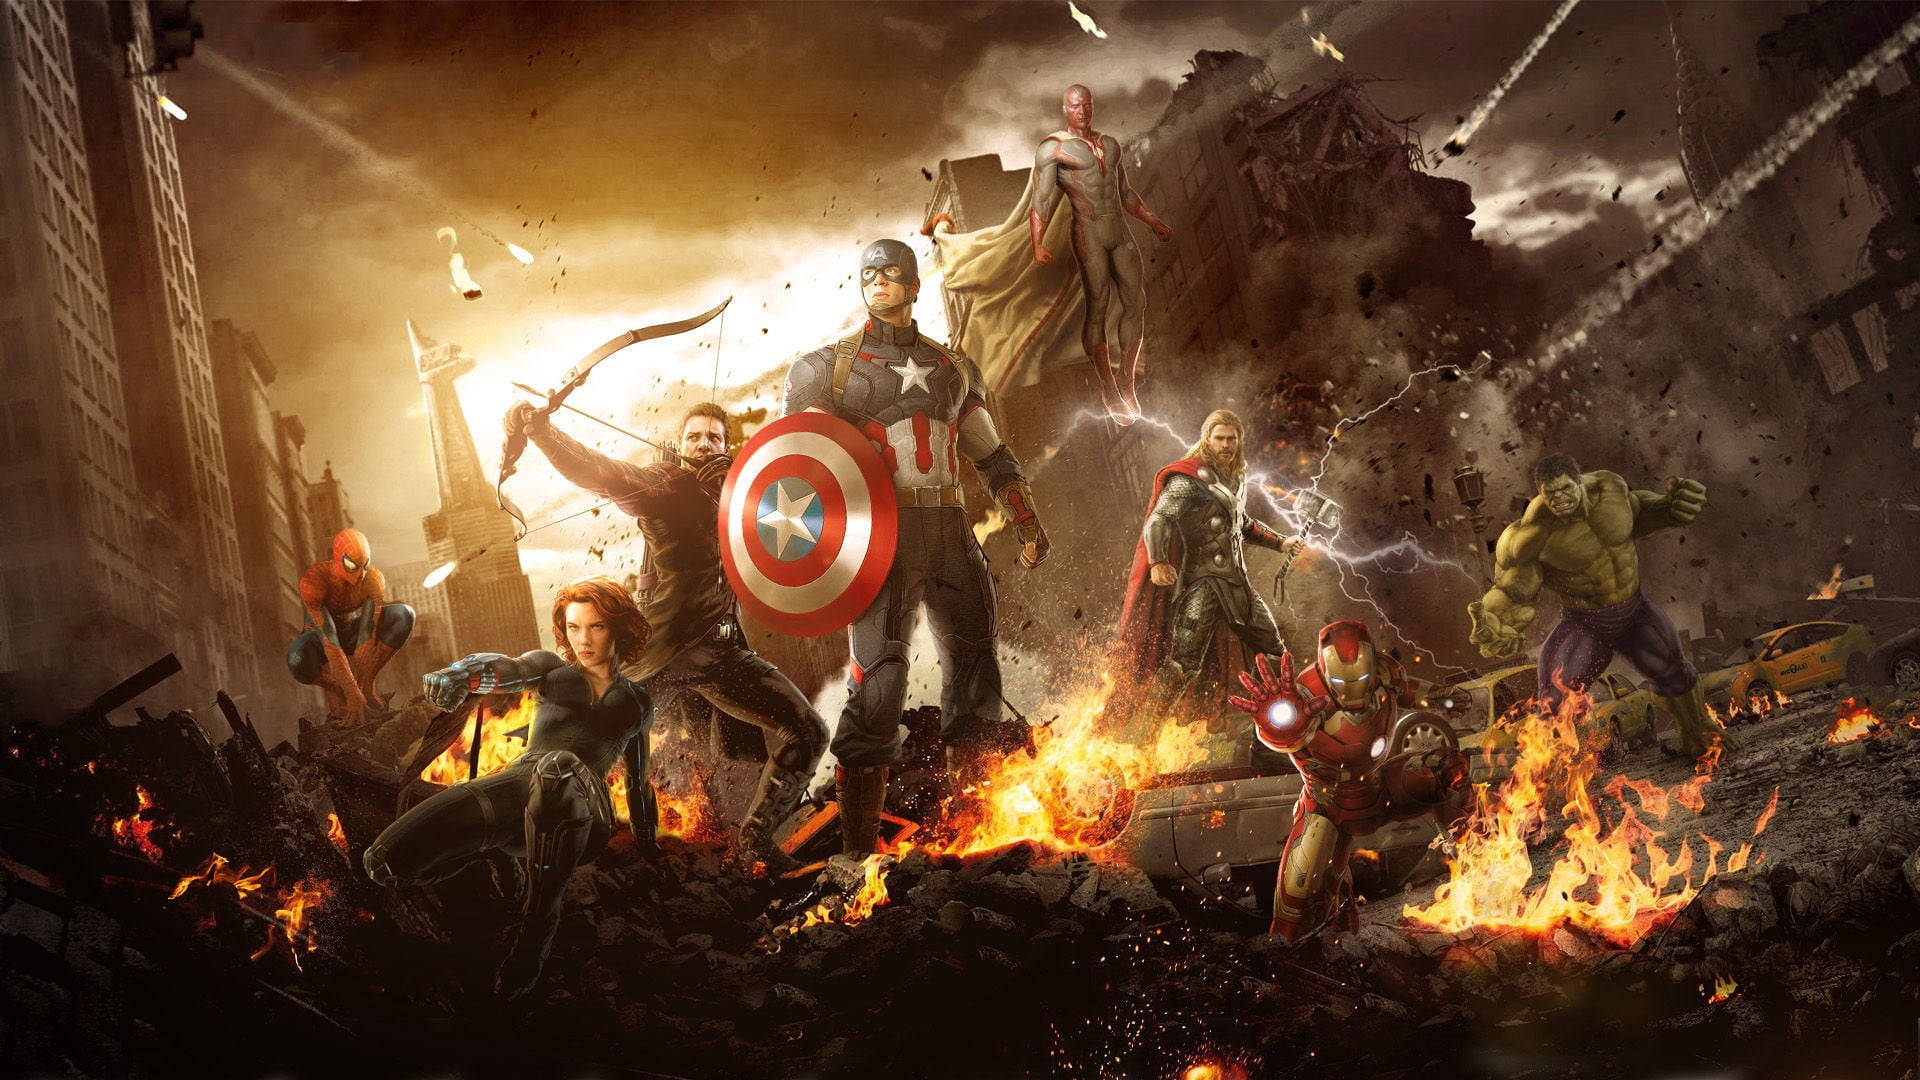 Marvel Avengers Infinity War Superheroes Background